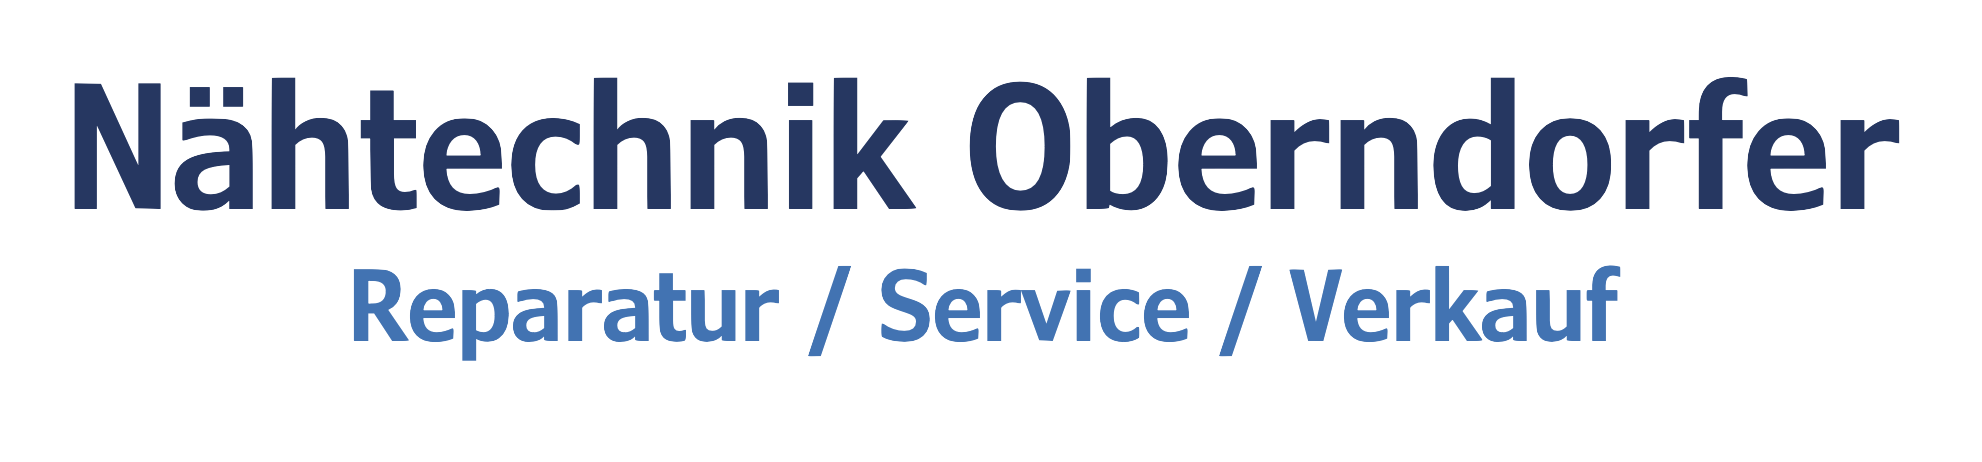 Nähtechnik Oberndorfer - Reparatur / Service / Verkauf